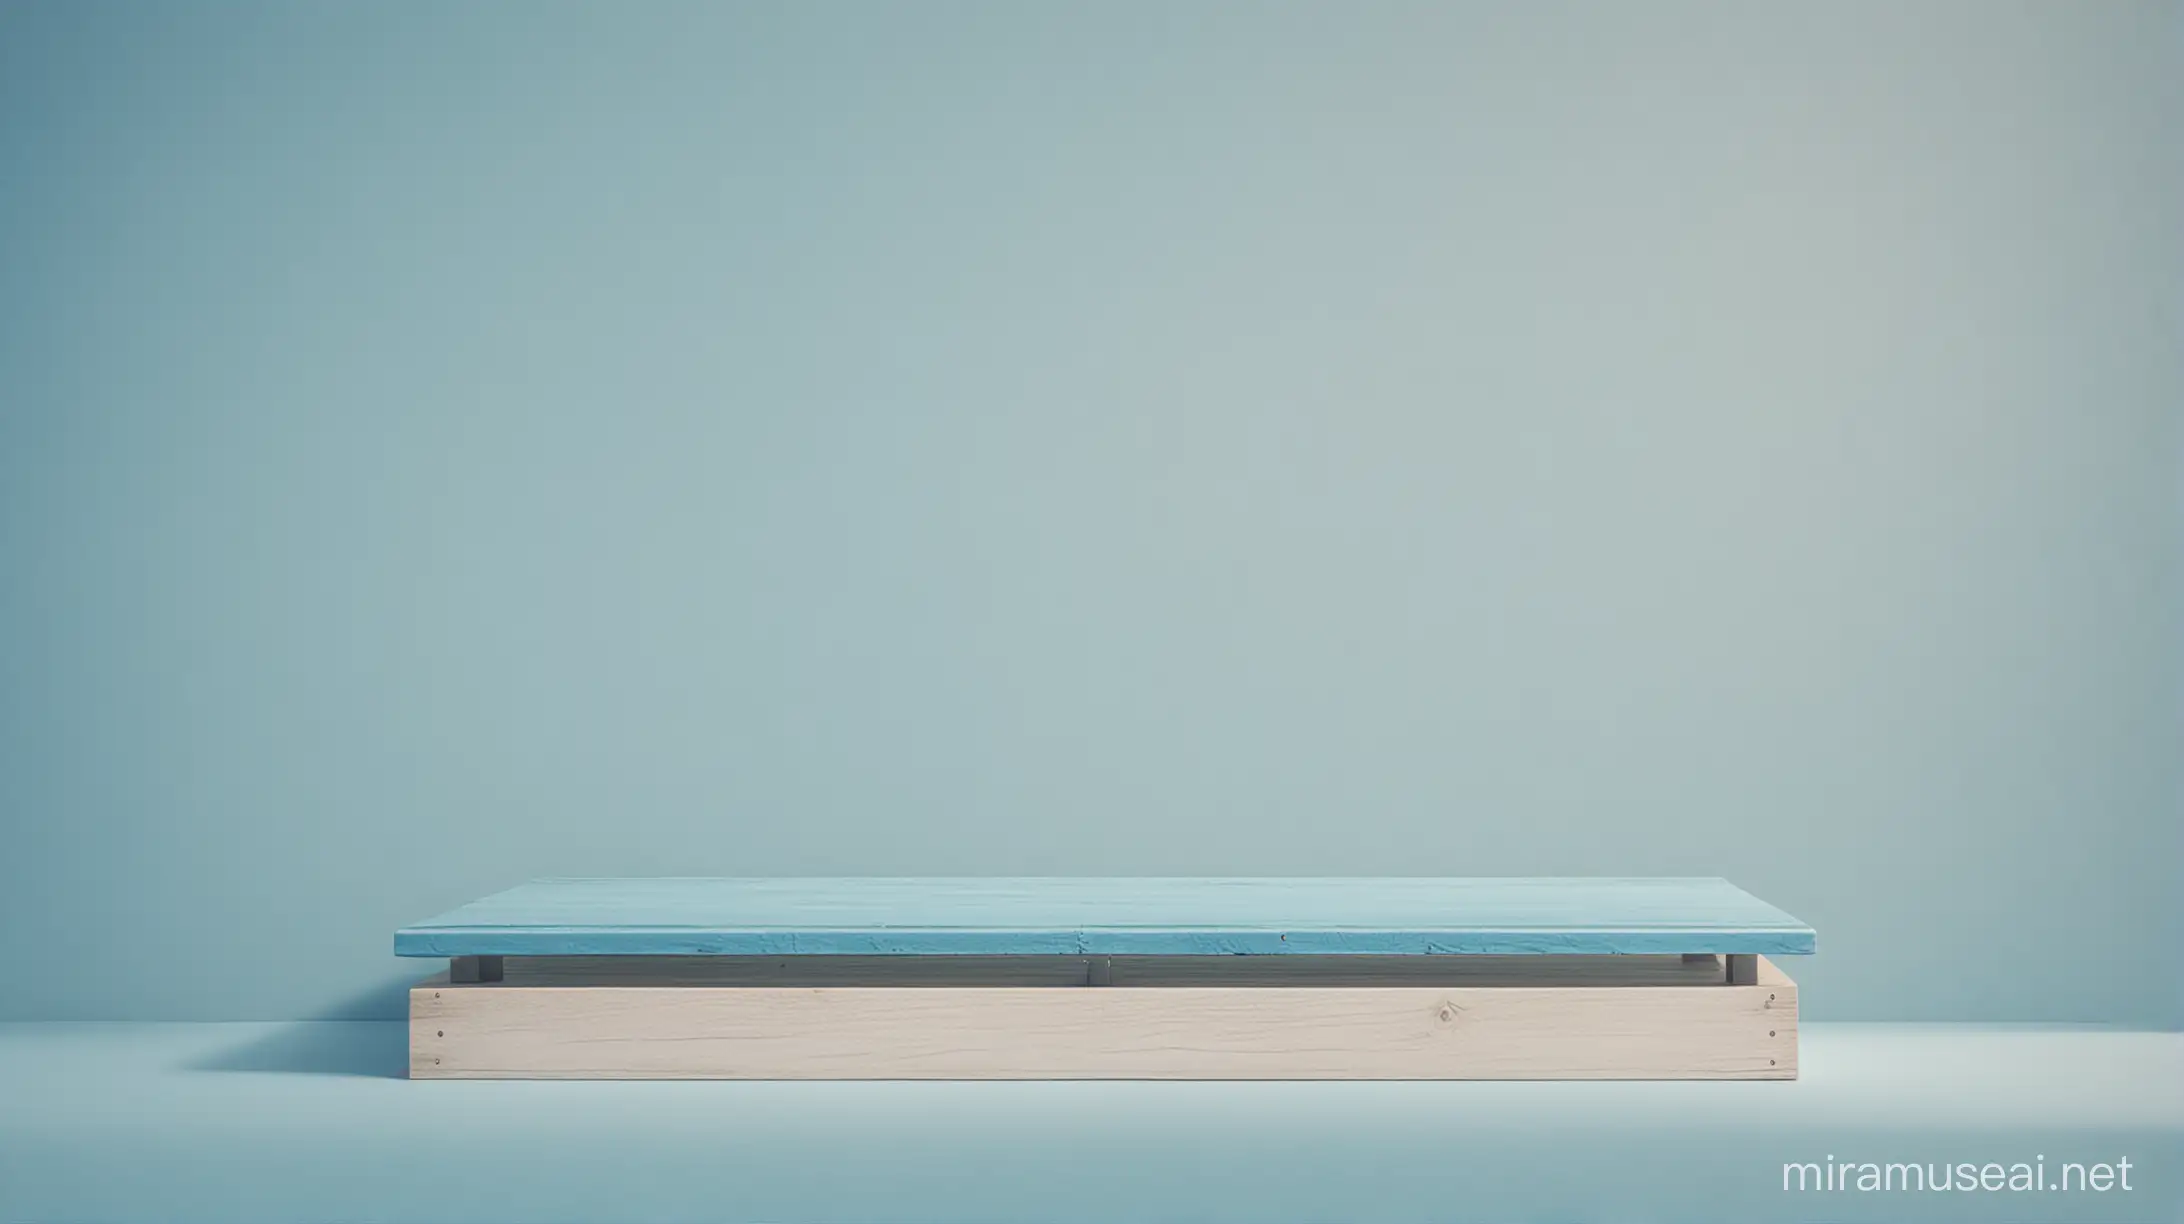 Tranquil Blue Platform with Soft Background